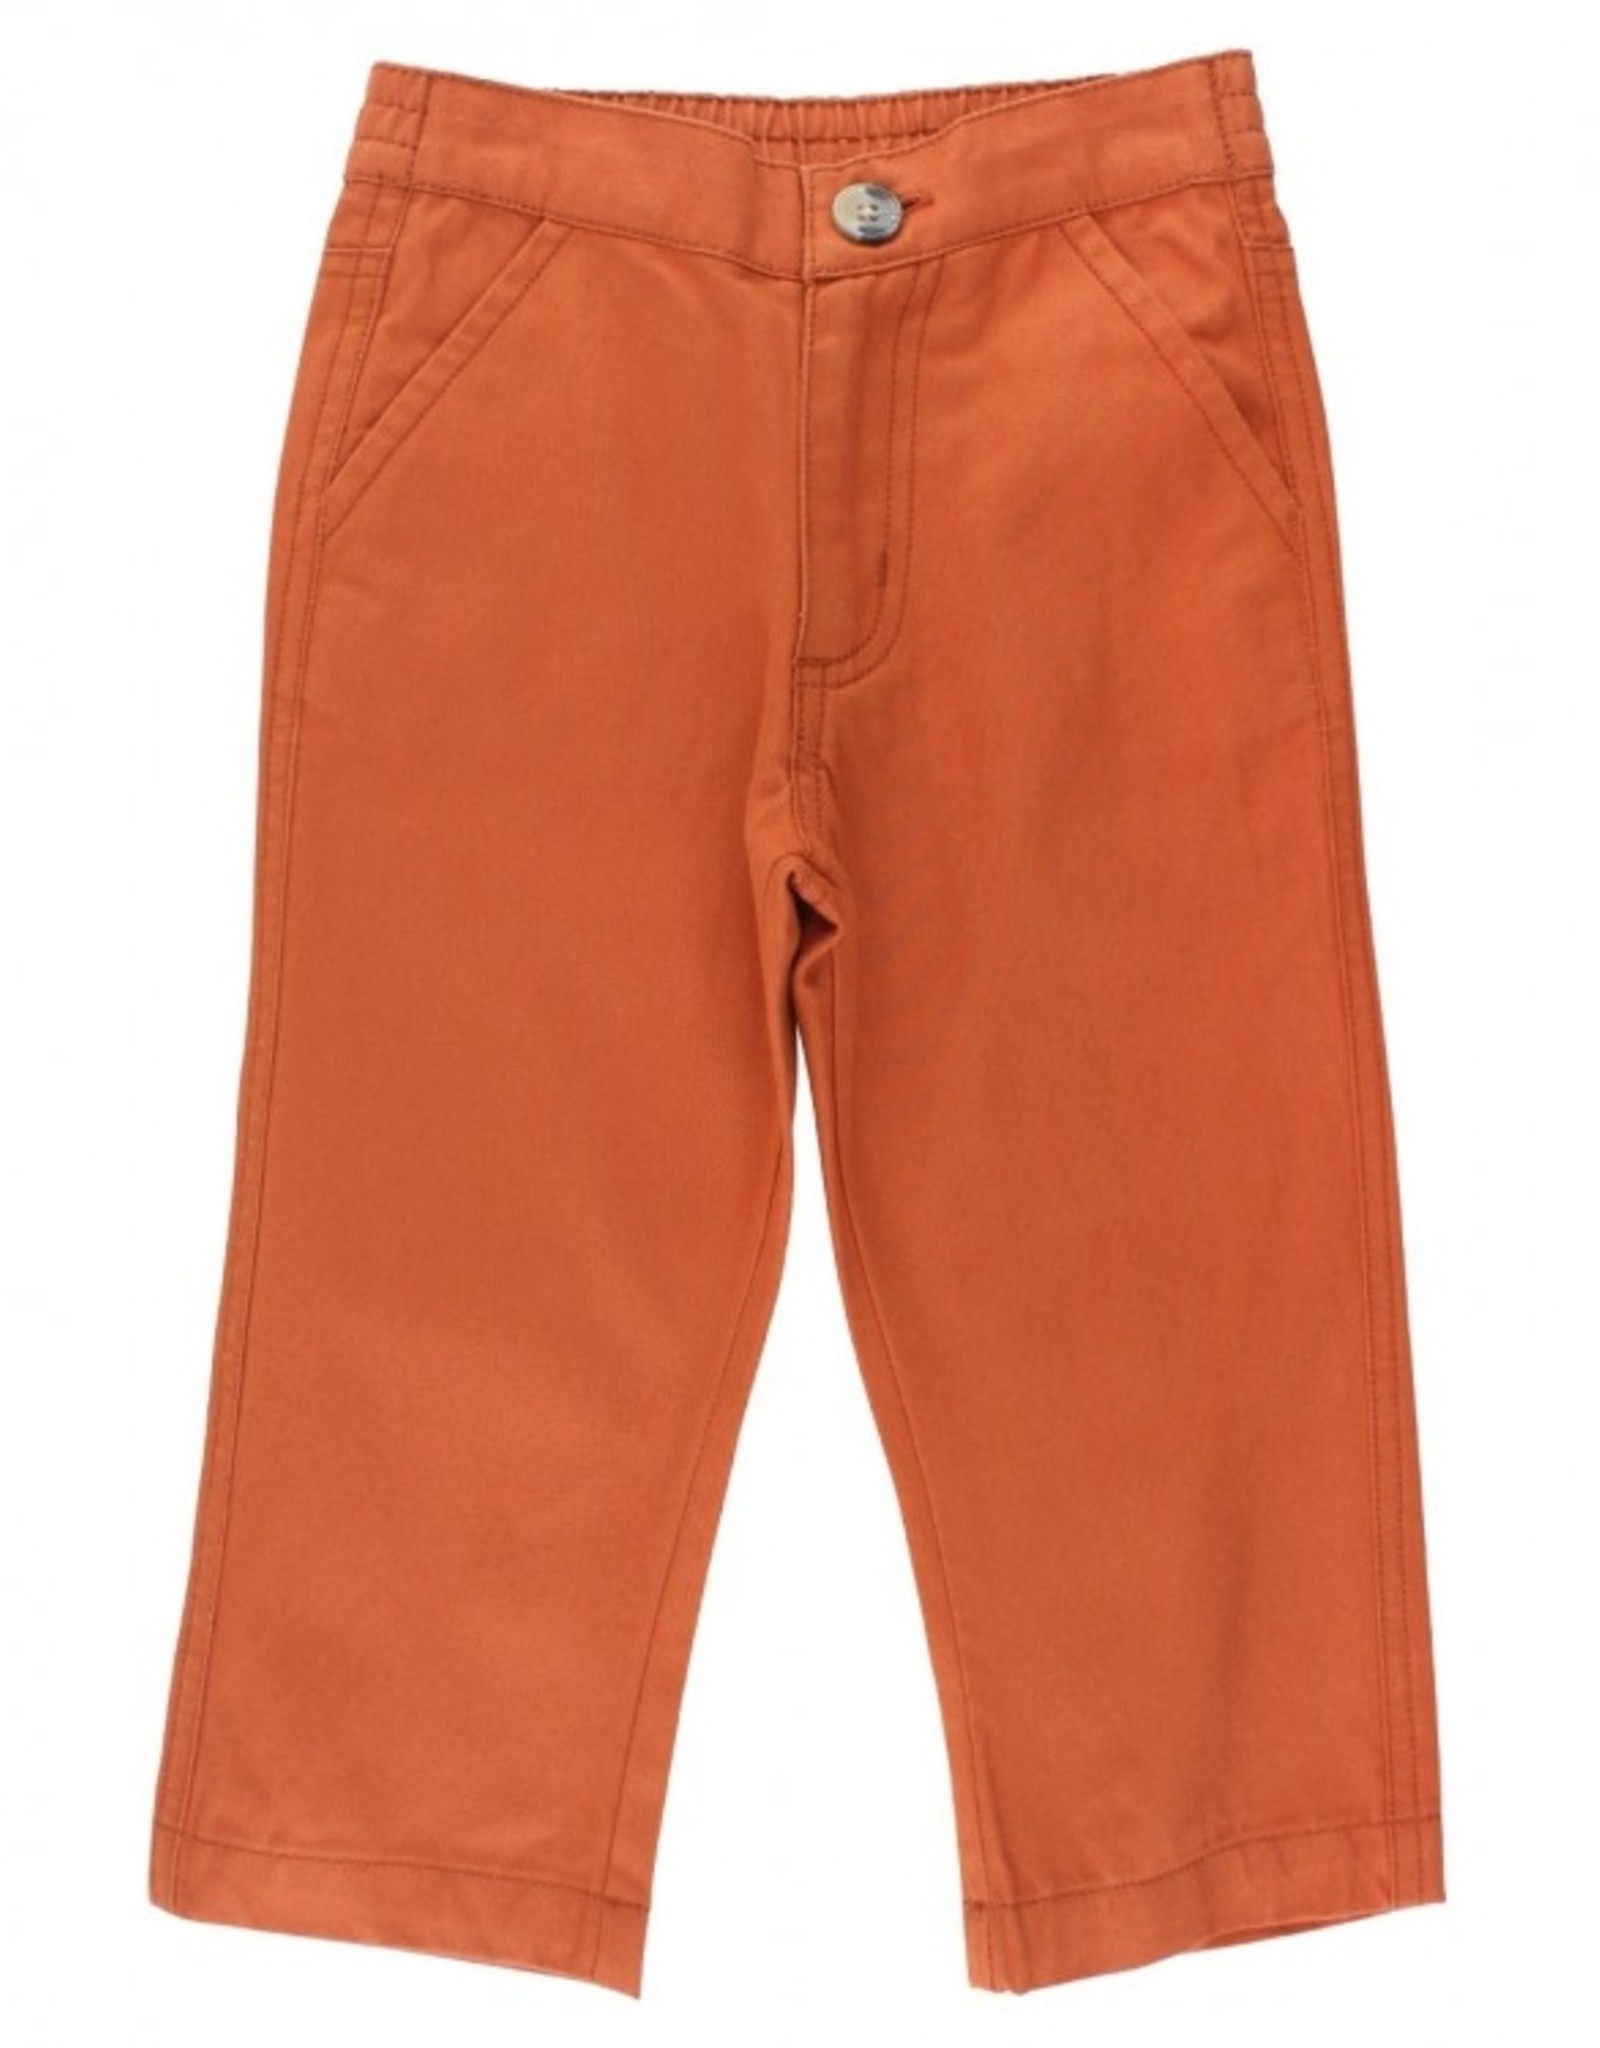 RuggedButts Orange Spice Straight Chino Pants